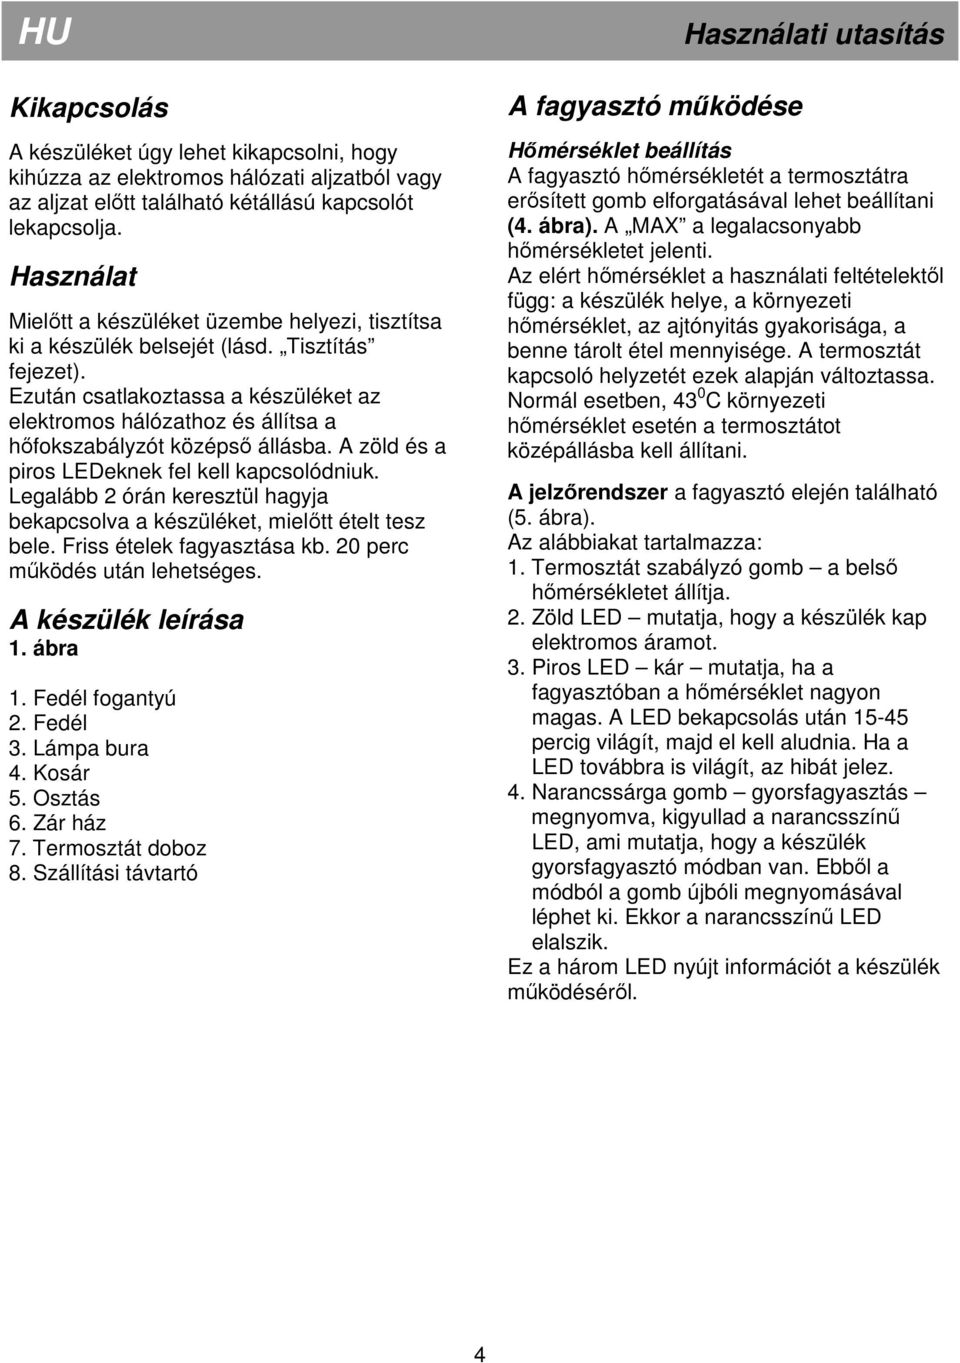 HSA Használati útmutató - PDF Free Download